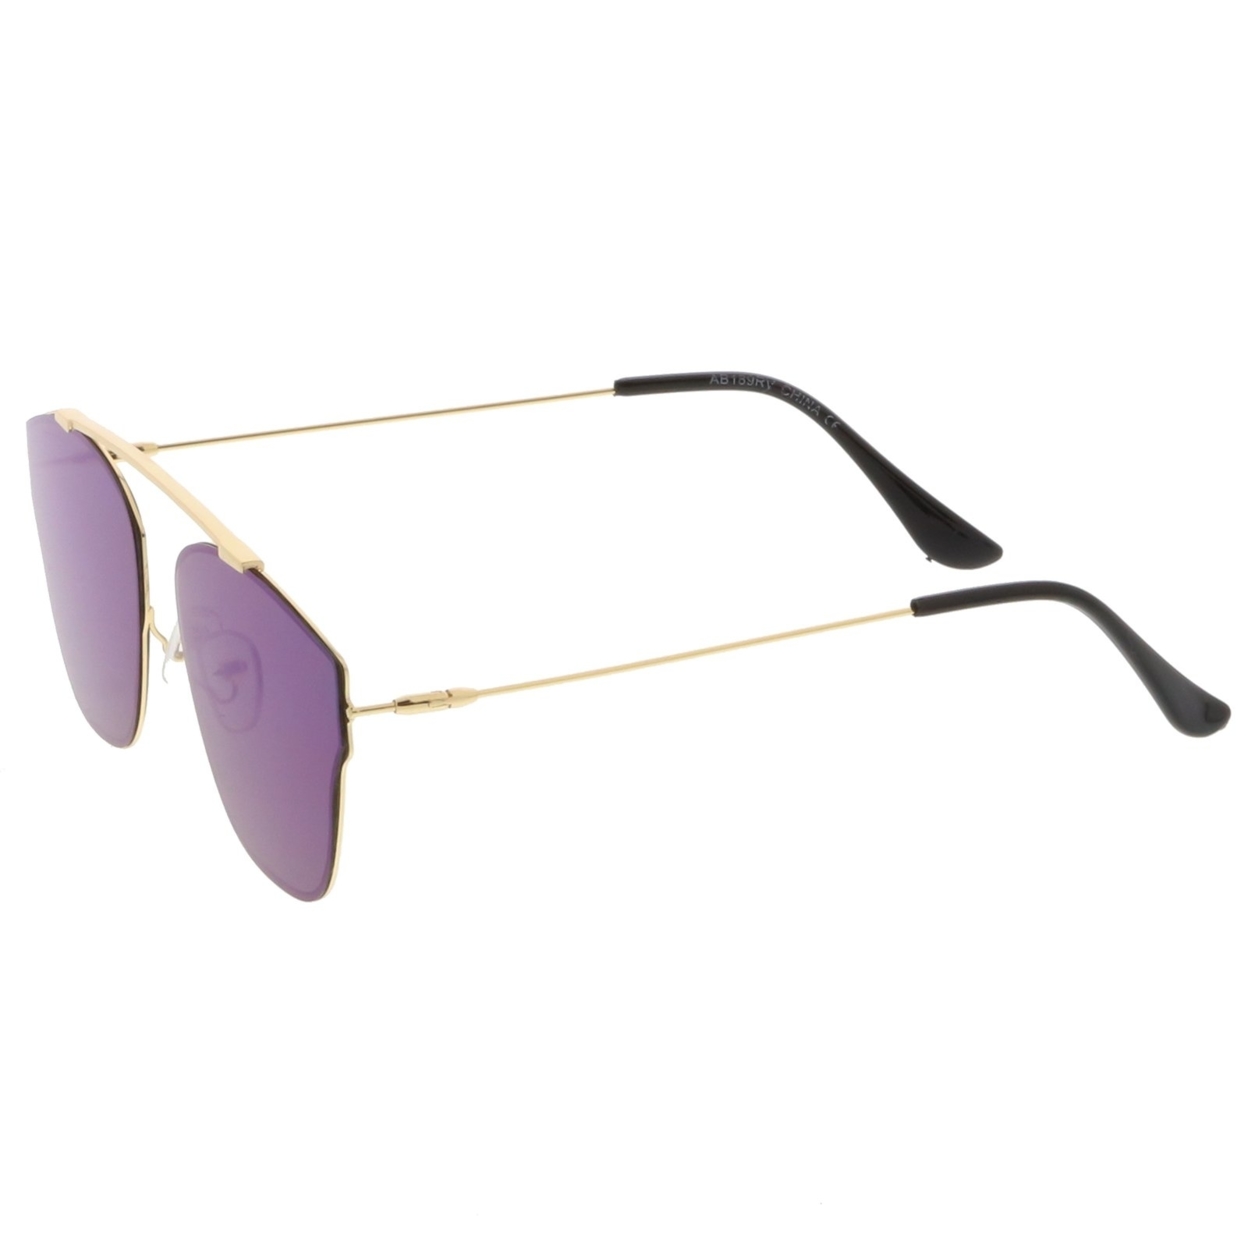 Modern Ultra Slim Metal Curved Crossbar Colored Mirror Flat Lens Pantos Sunglasses 57mm - Gold / Green Mirror